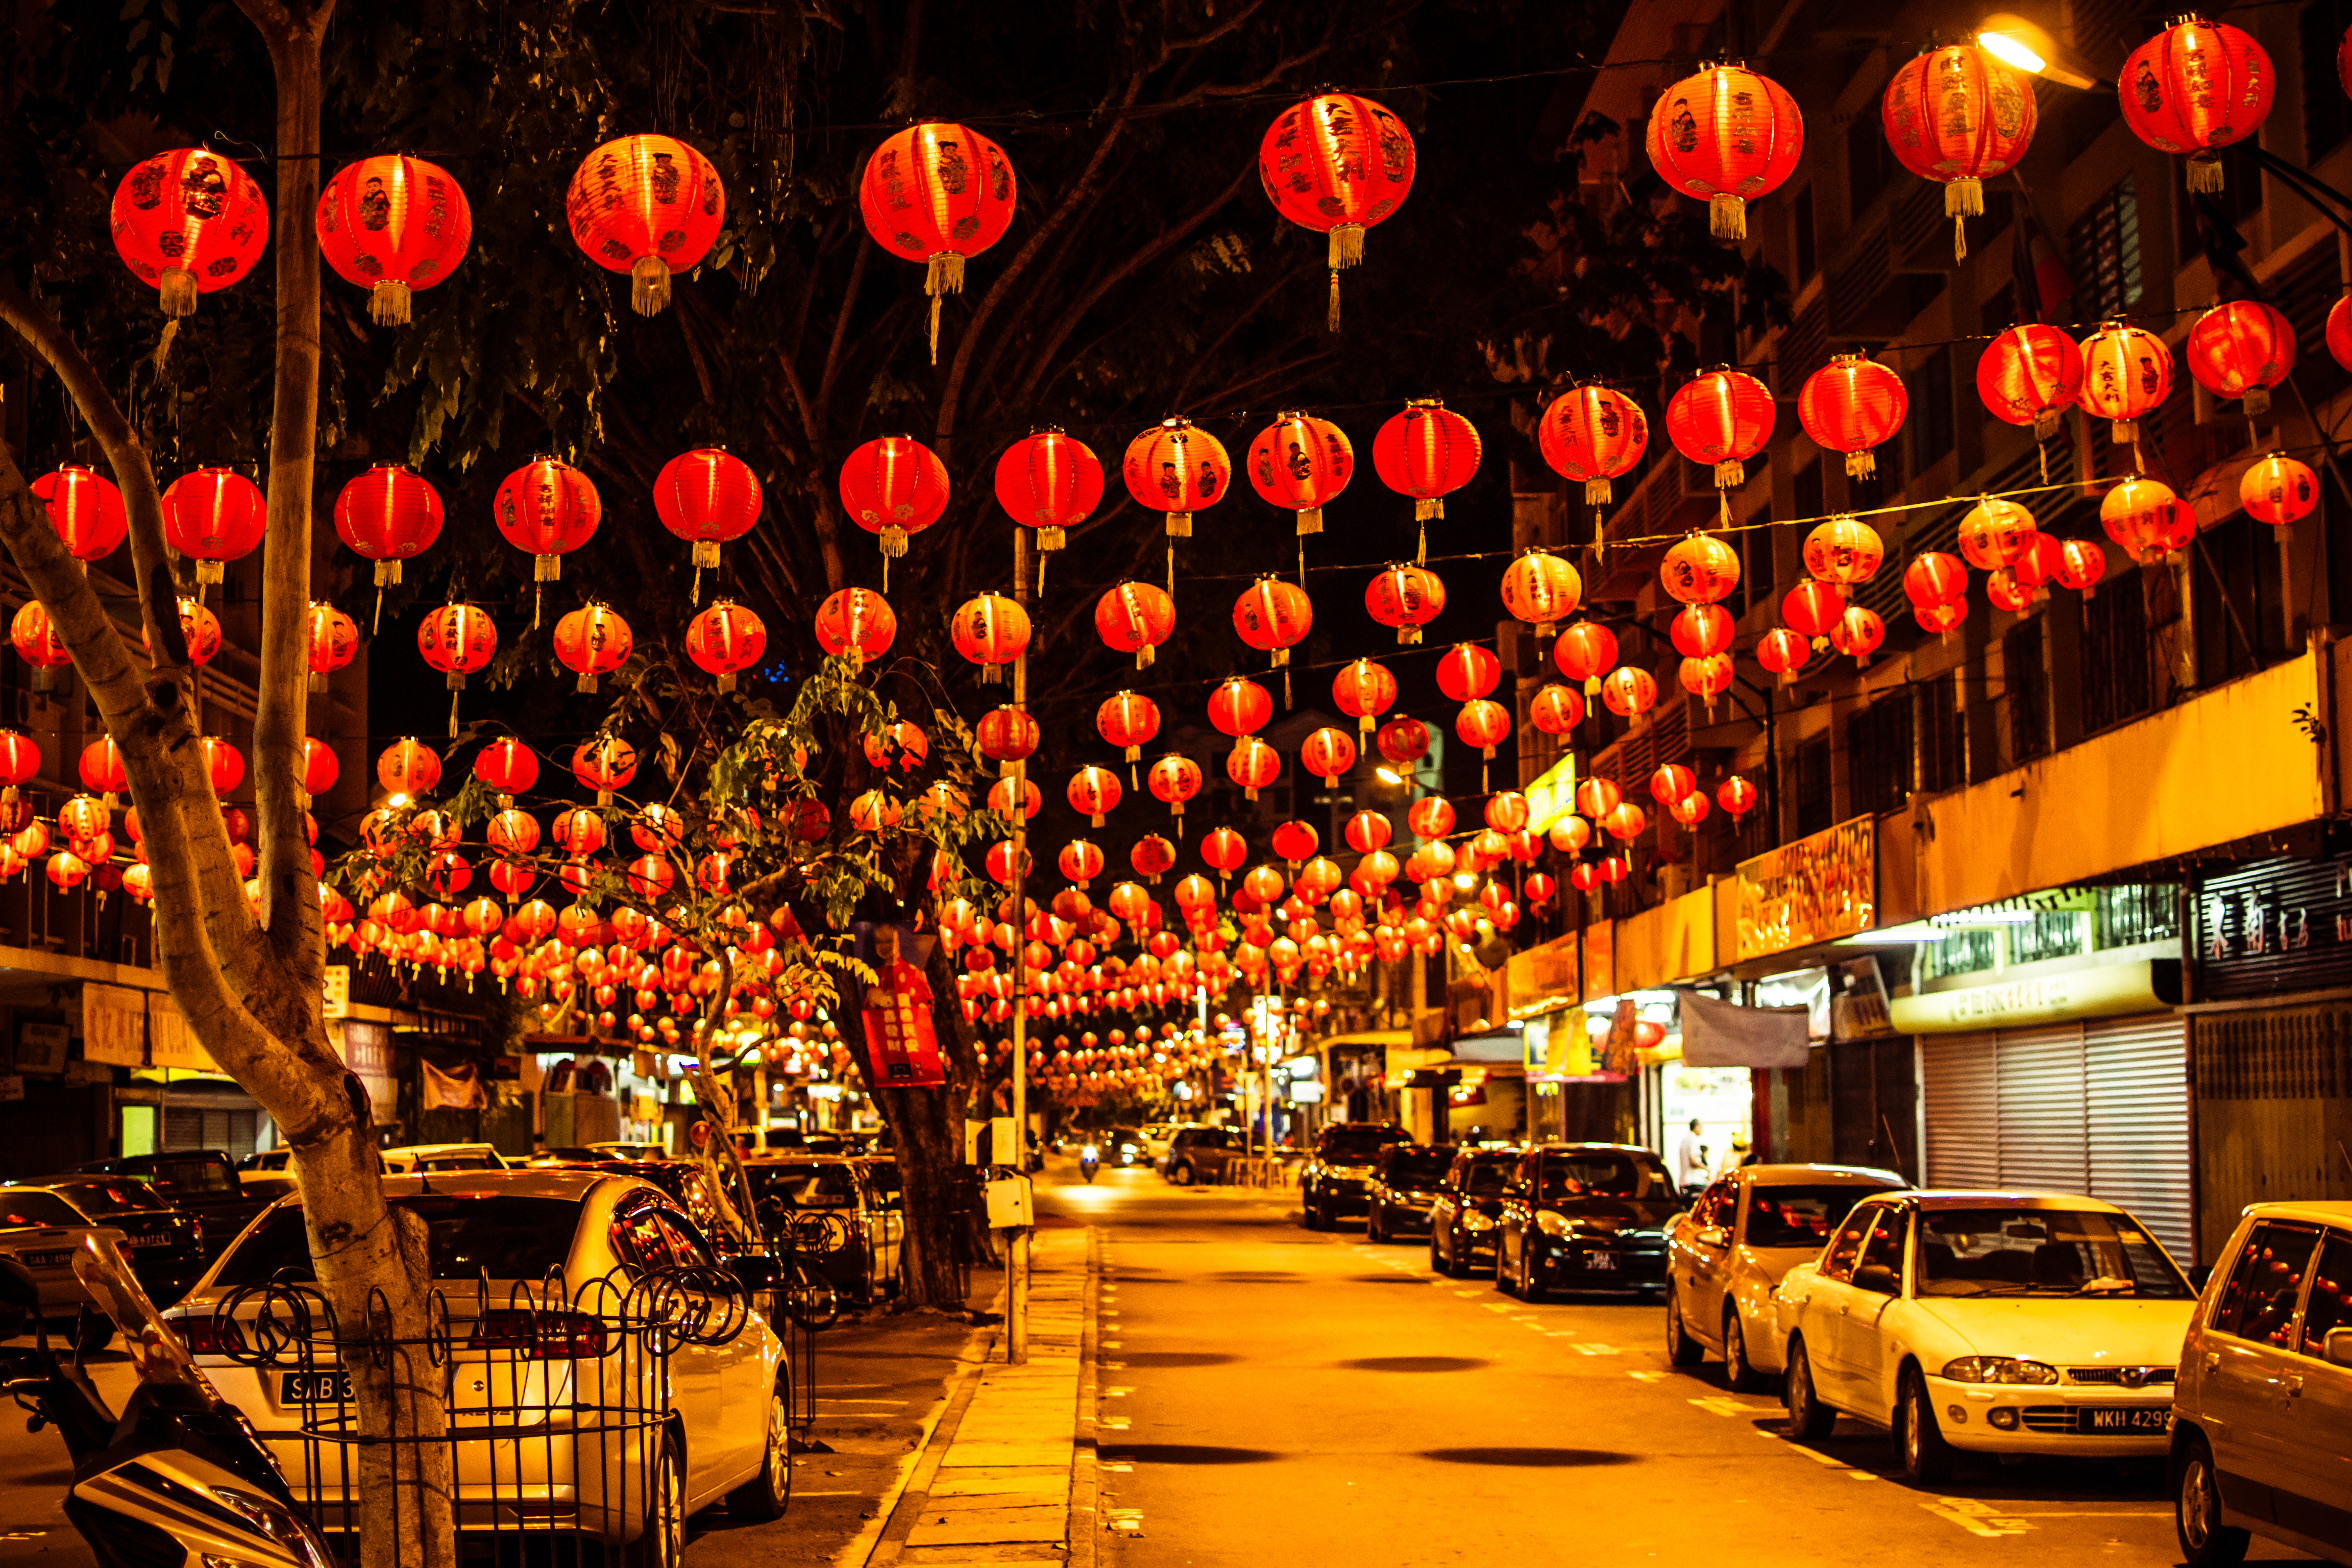 Gaya Street in Kota Kinabalu, Malaysia filled with Chinese lanterns during the New Year celebration. Photo taken on February 18, 2013.